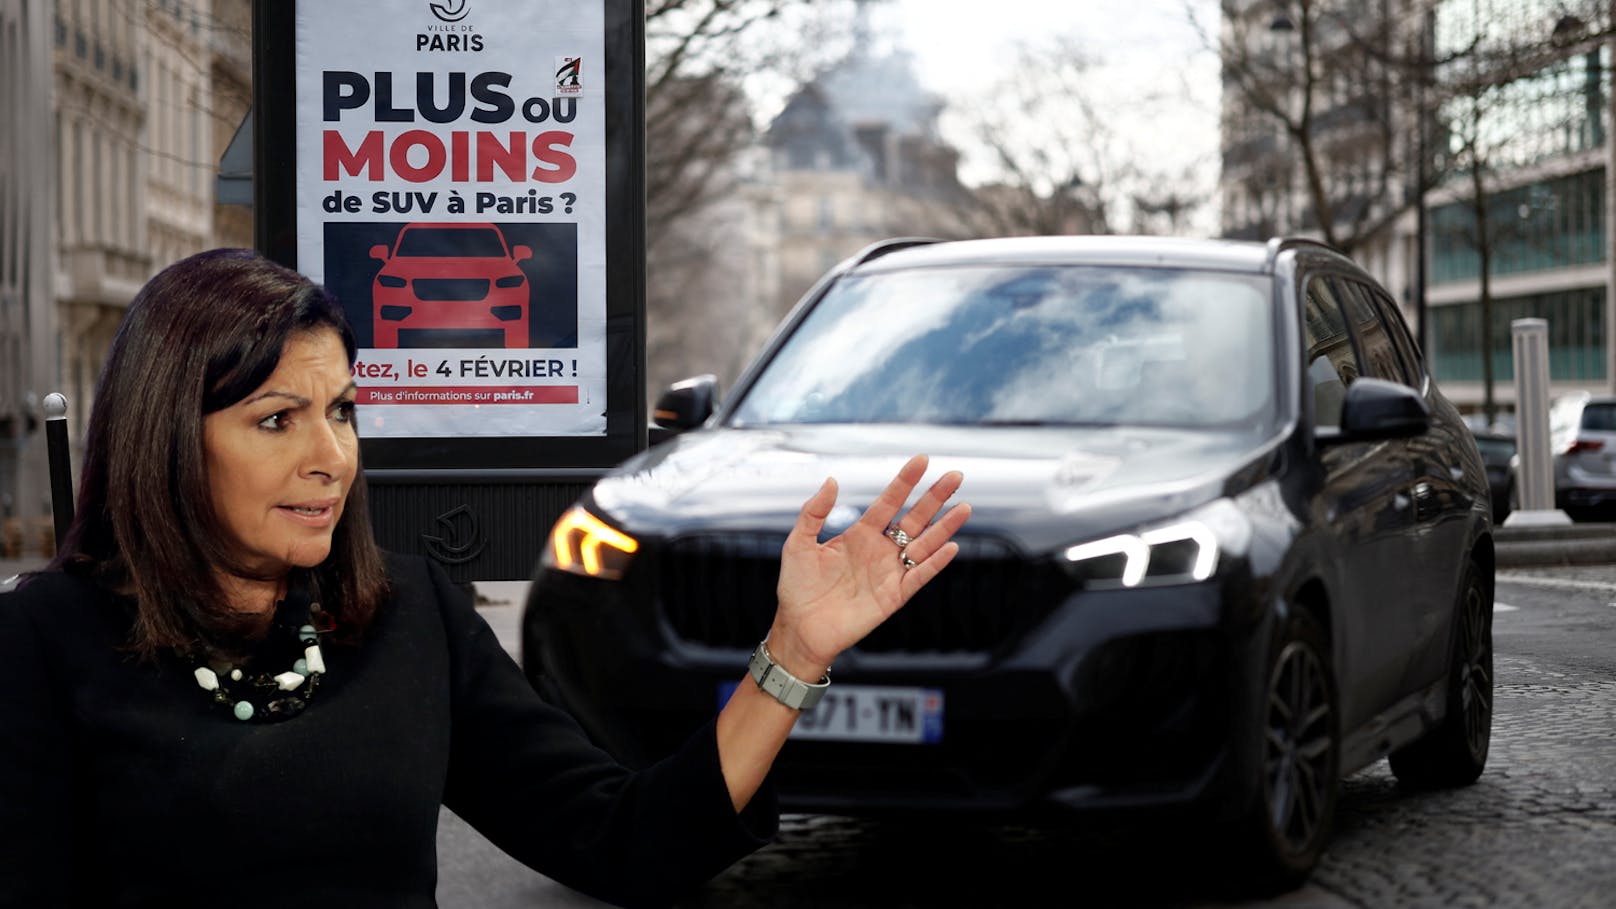 Pariser Bürgermeisterin führt "Krieg" gegen SUV